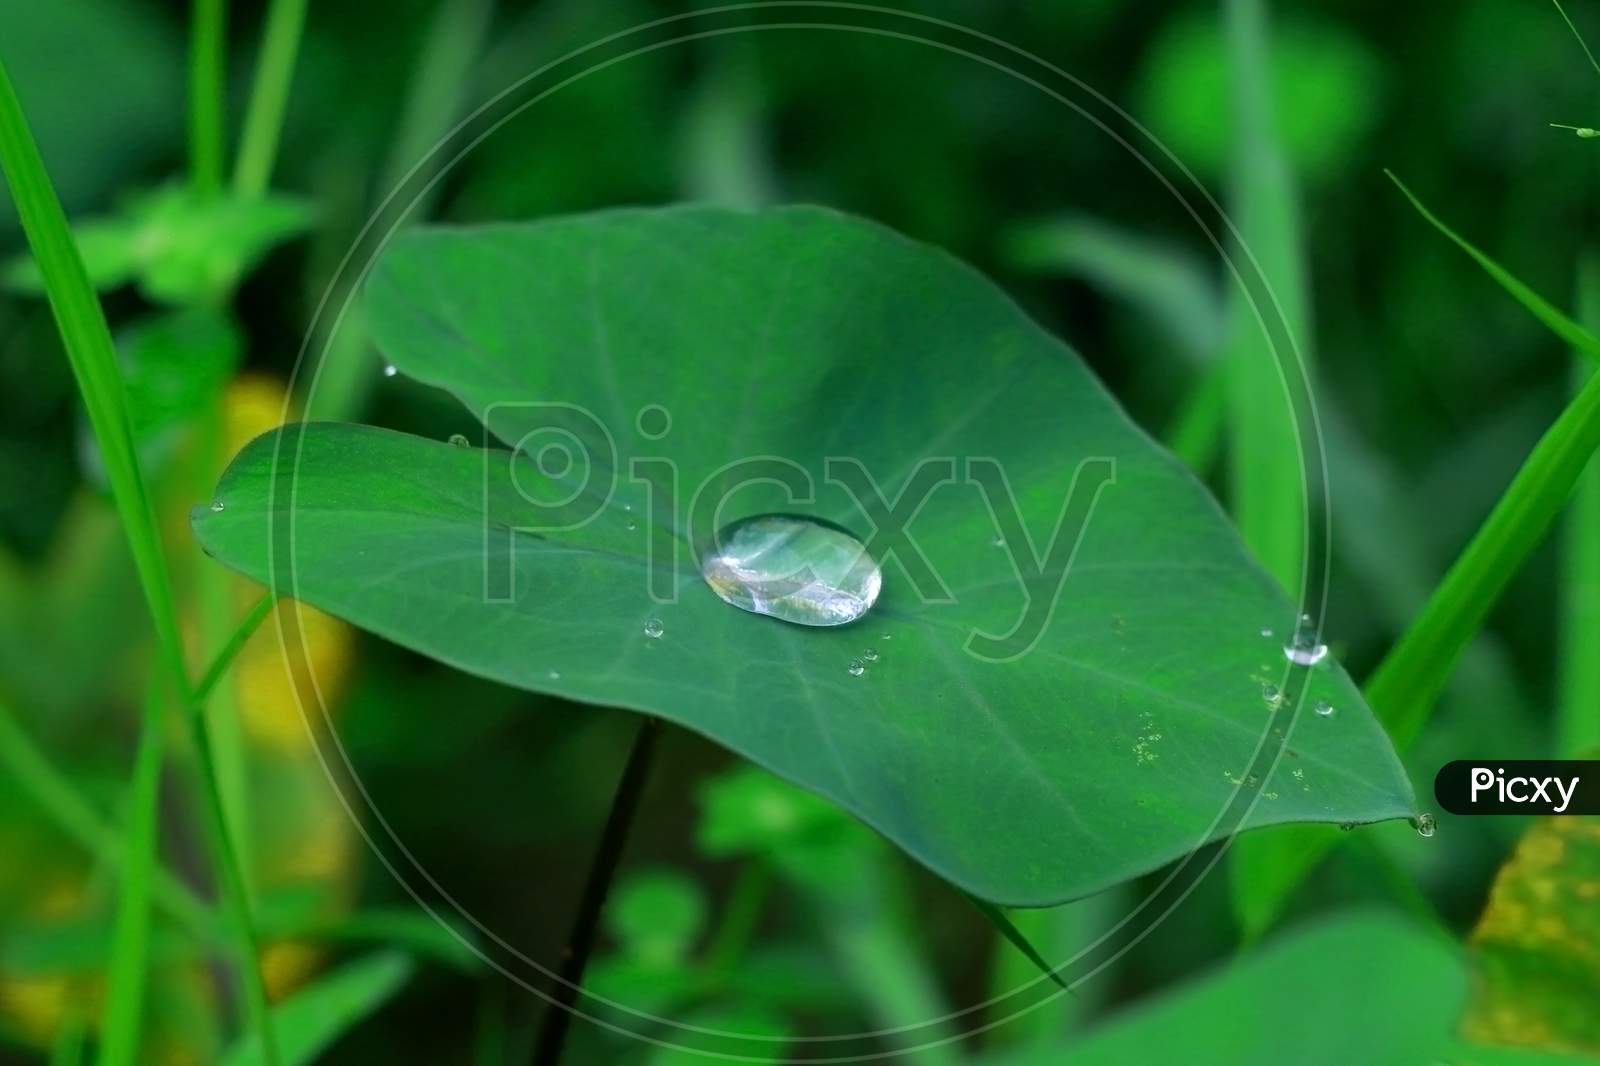 Raindrops on Cucumber leaves